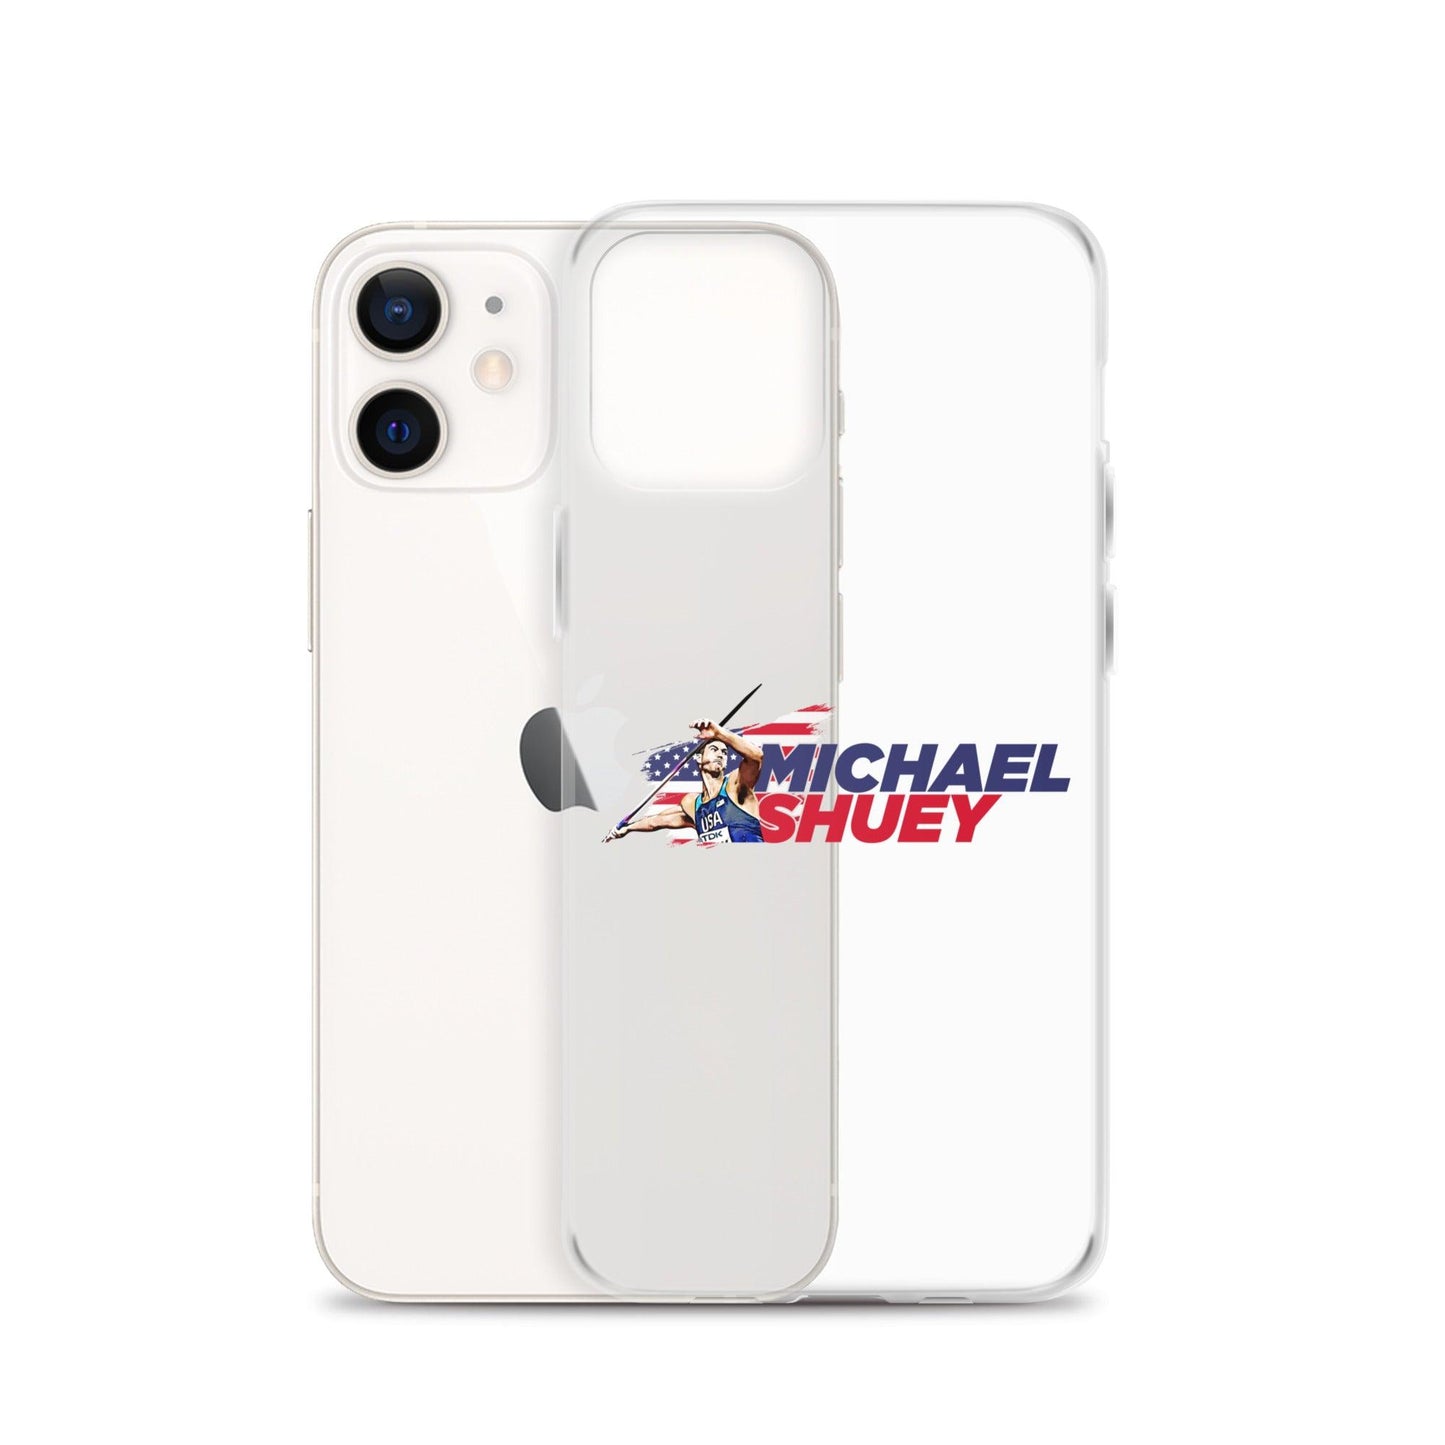 Michael Shuey “Essential” iPhone Case - Fan Arch